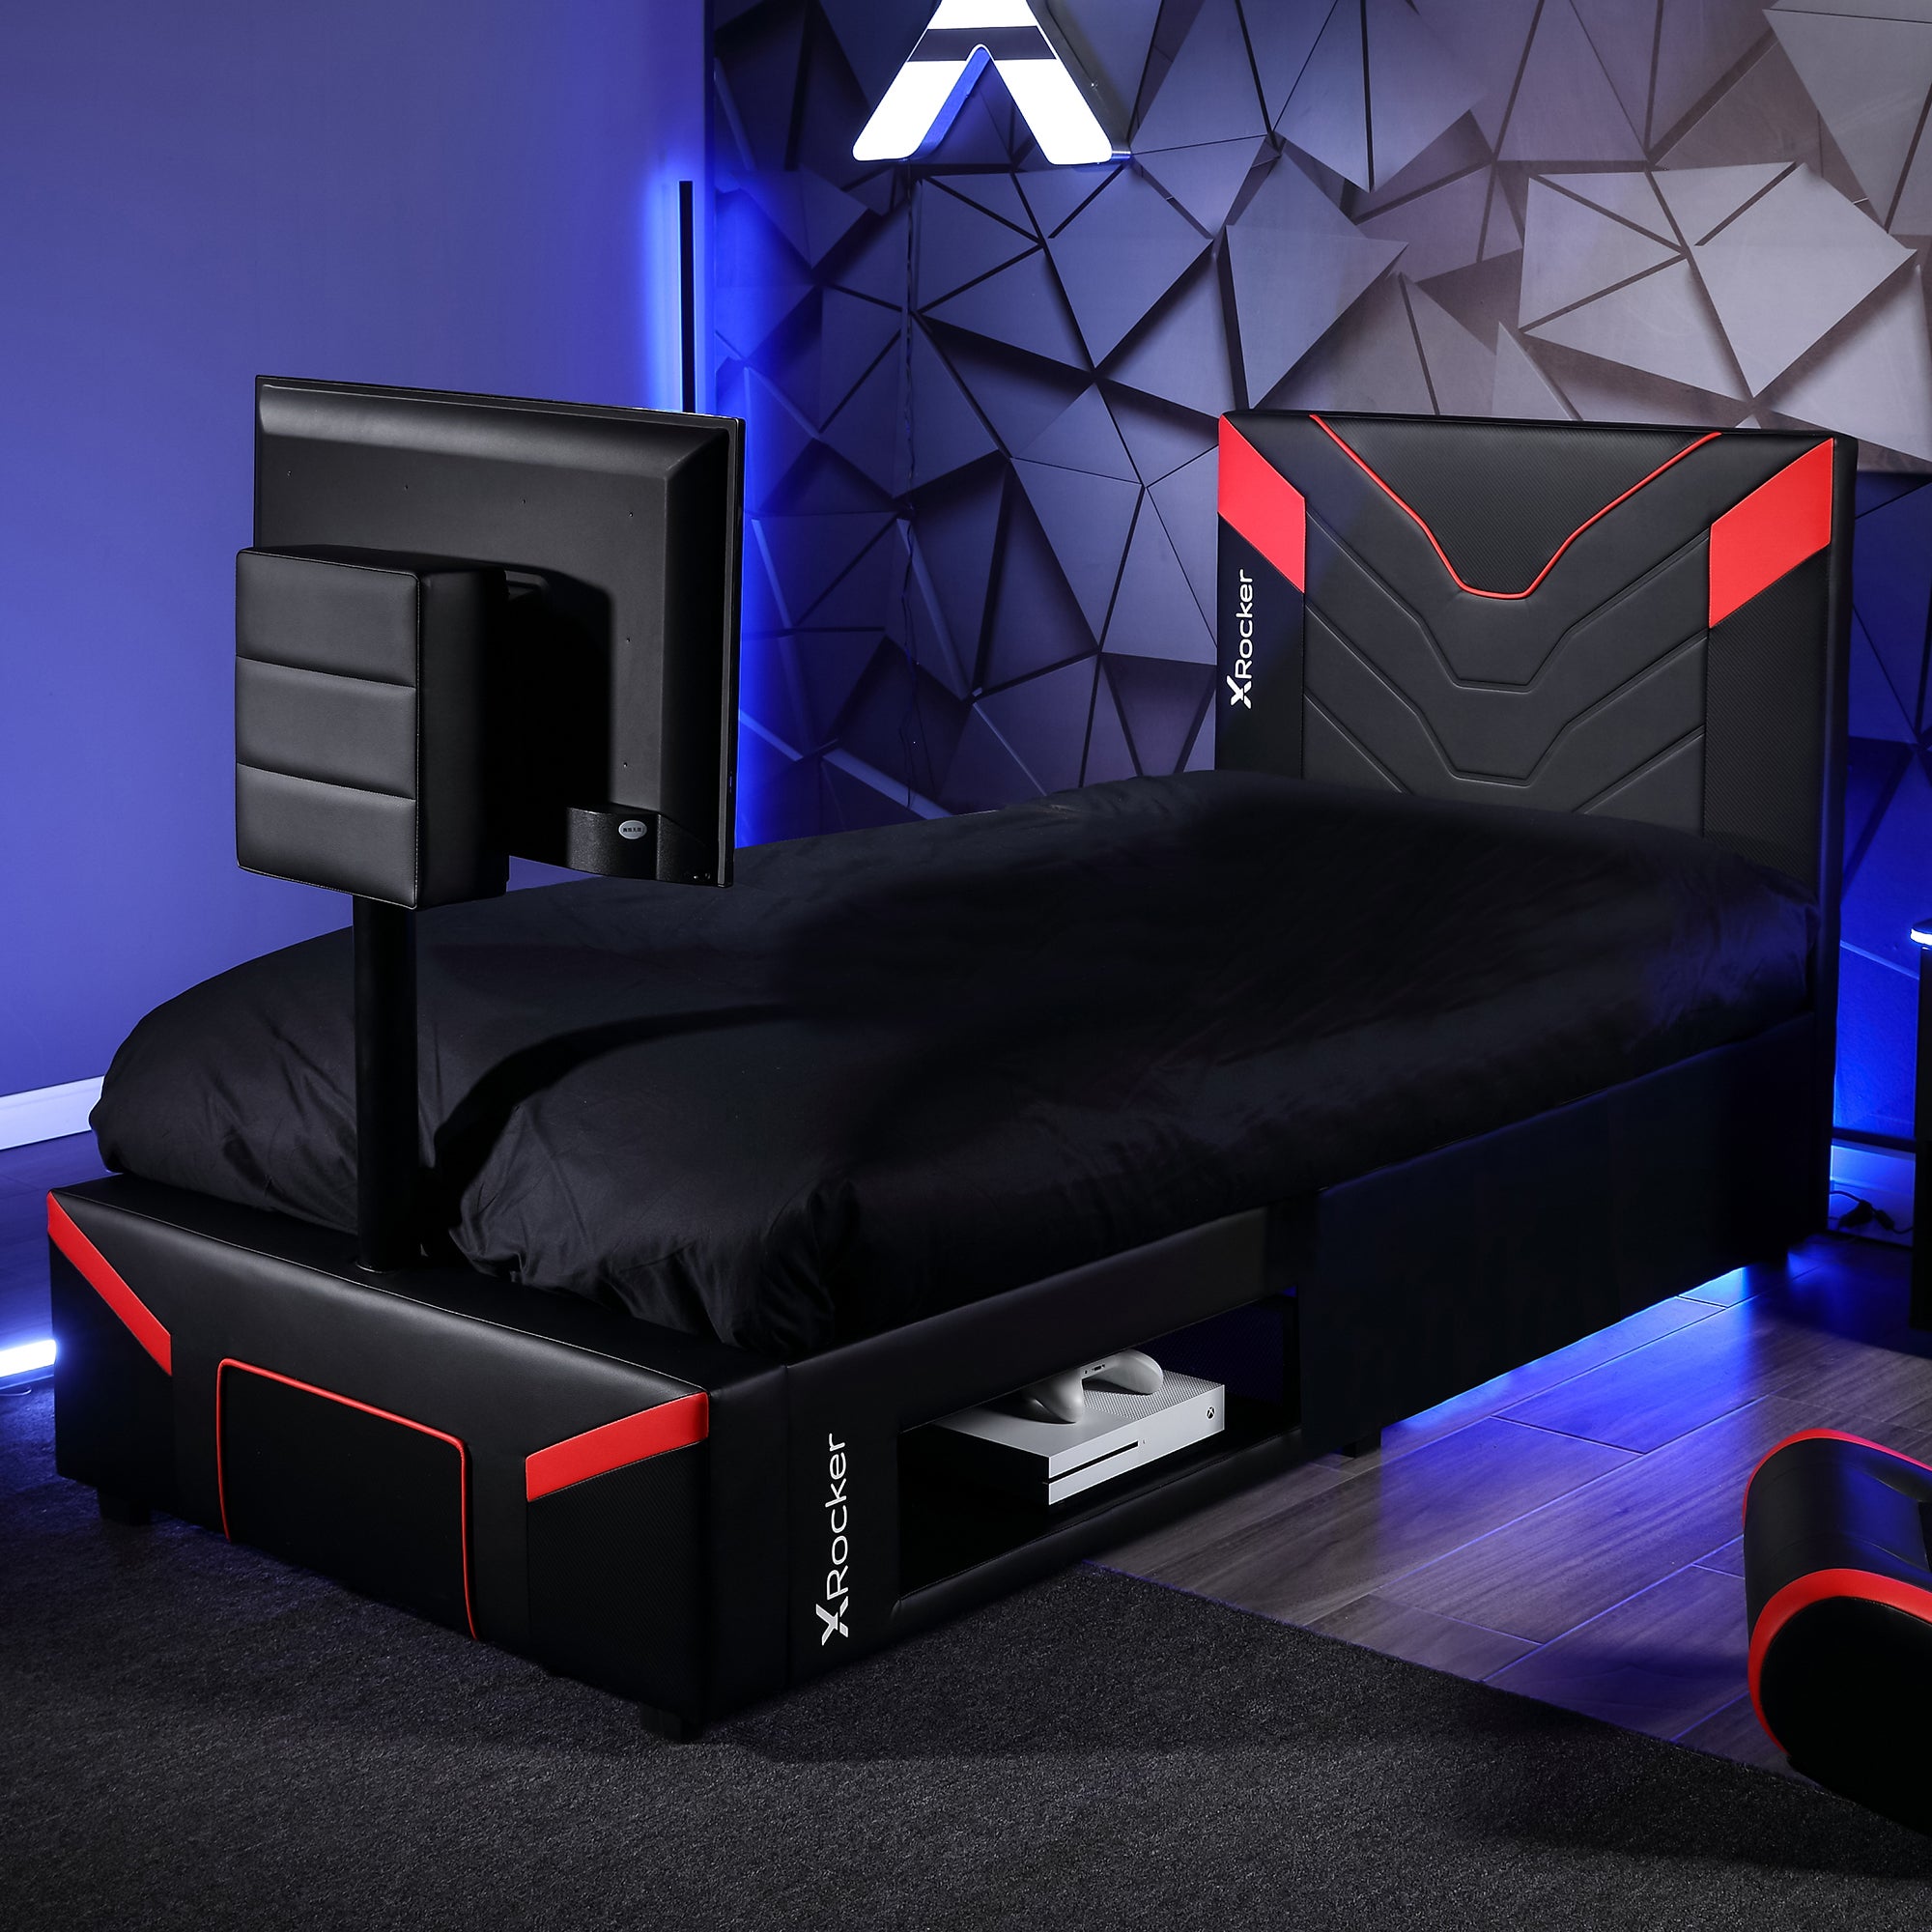 X Rocker Cerberus Twist TV Single Gaming Bed Frame